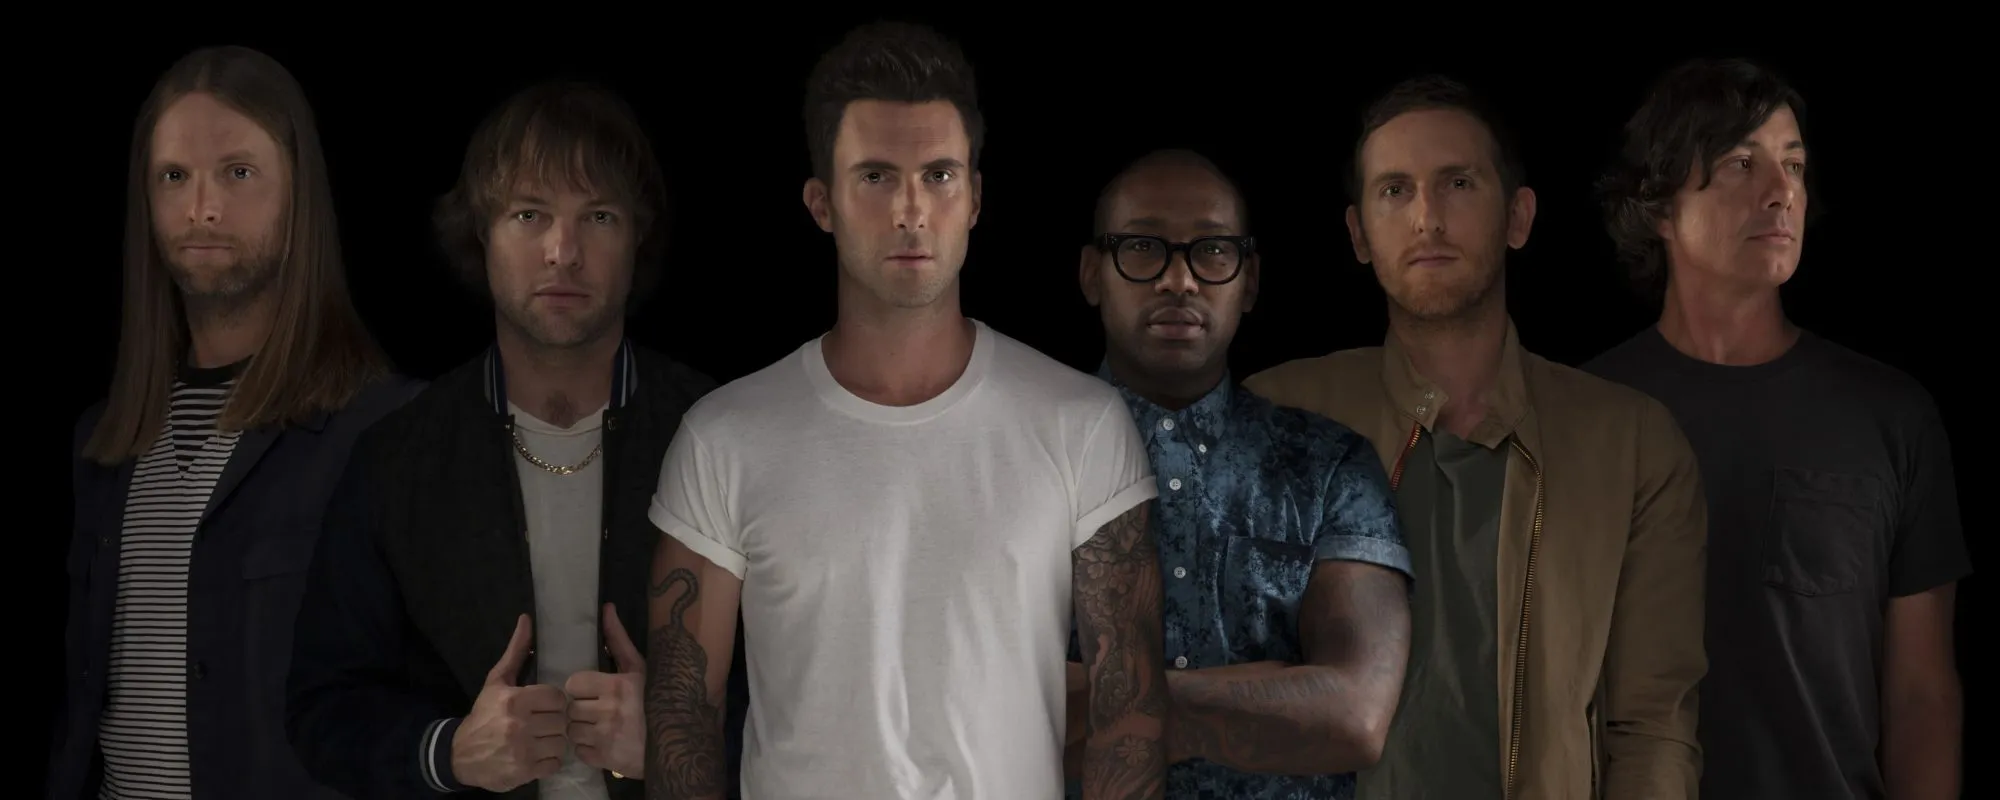 Maroon 5 Announces New Single “Beautiful Mistakes” featuring Megan Thee Stallion